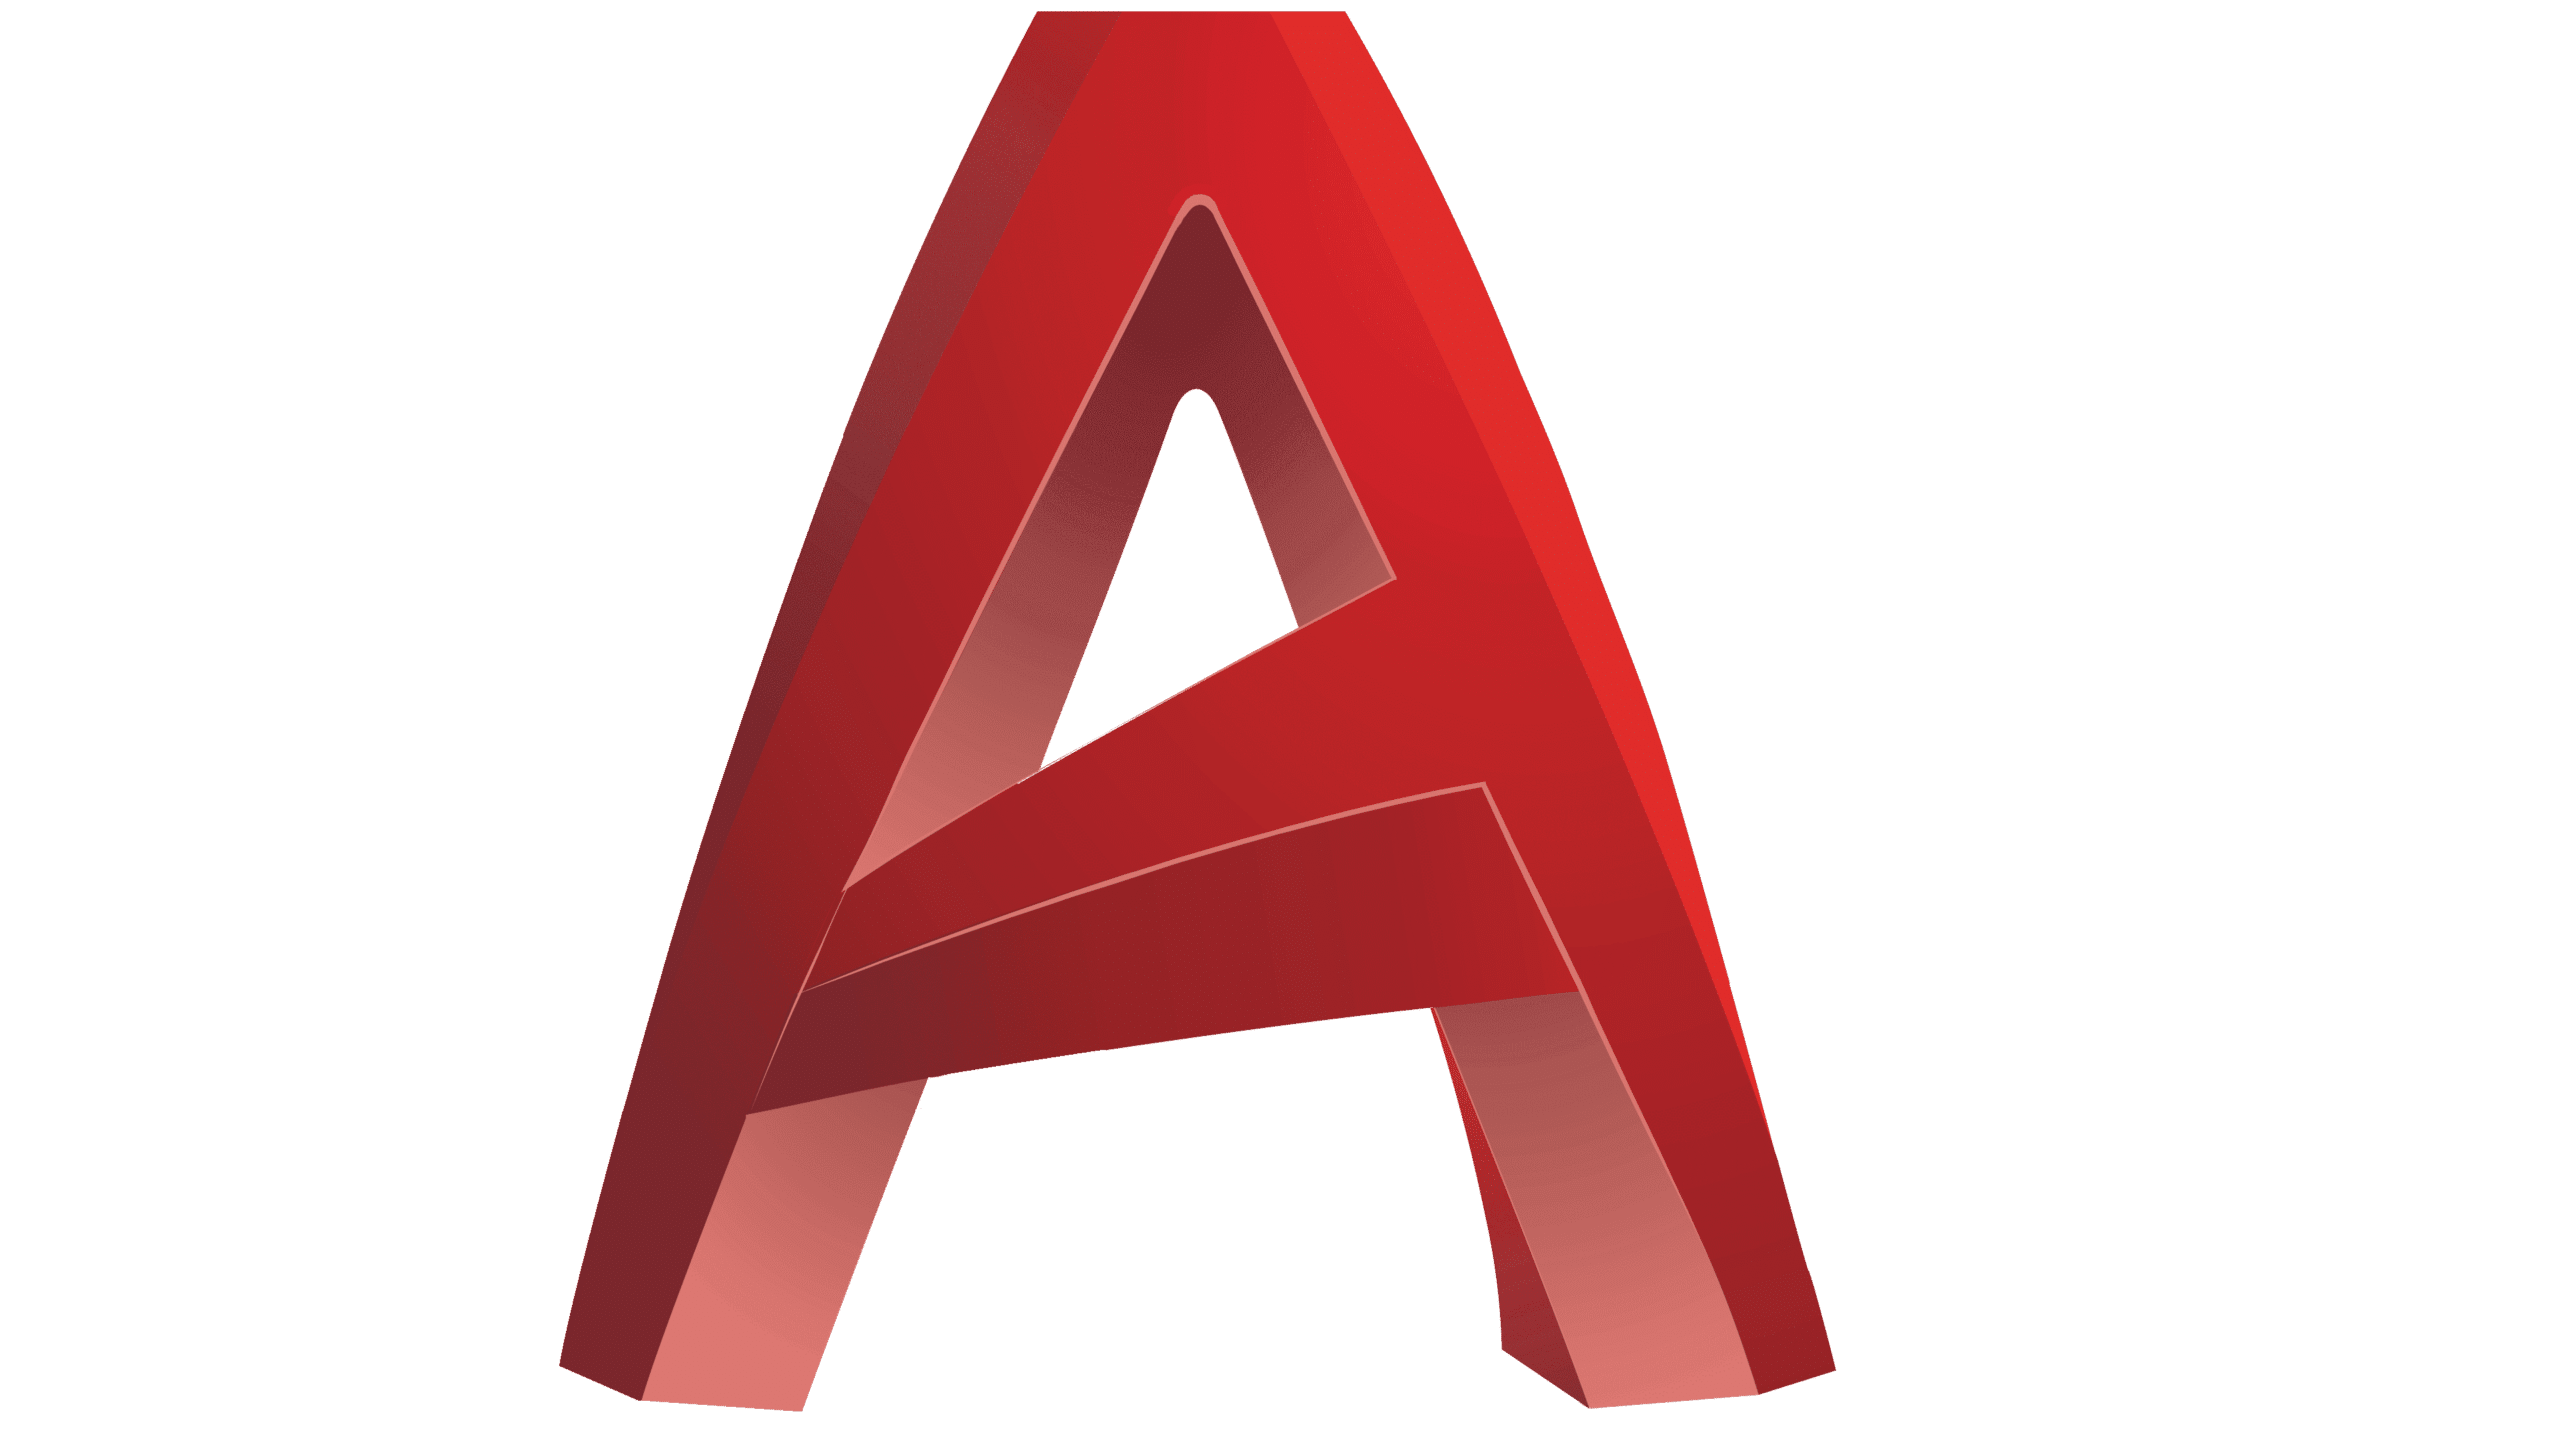 Logo AutoCAD